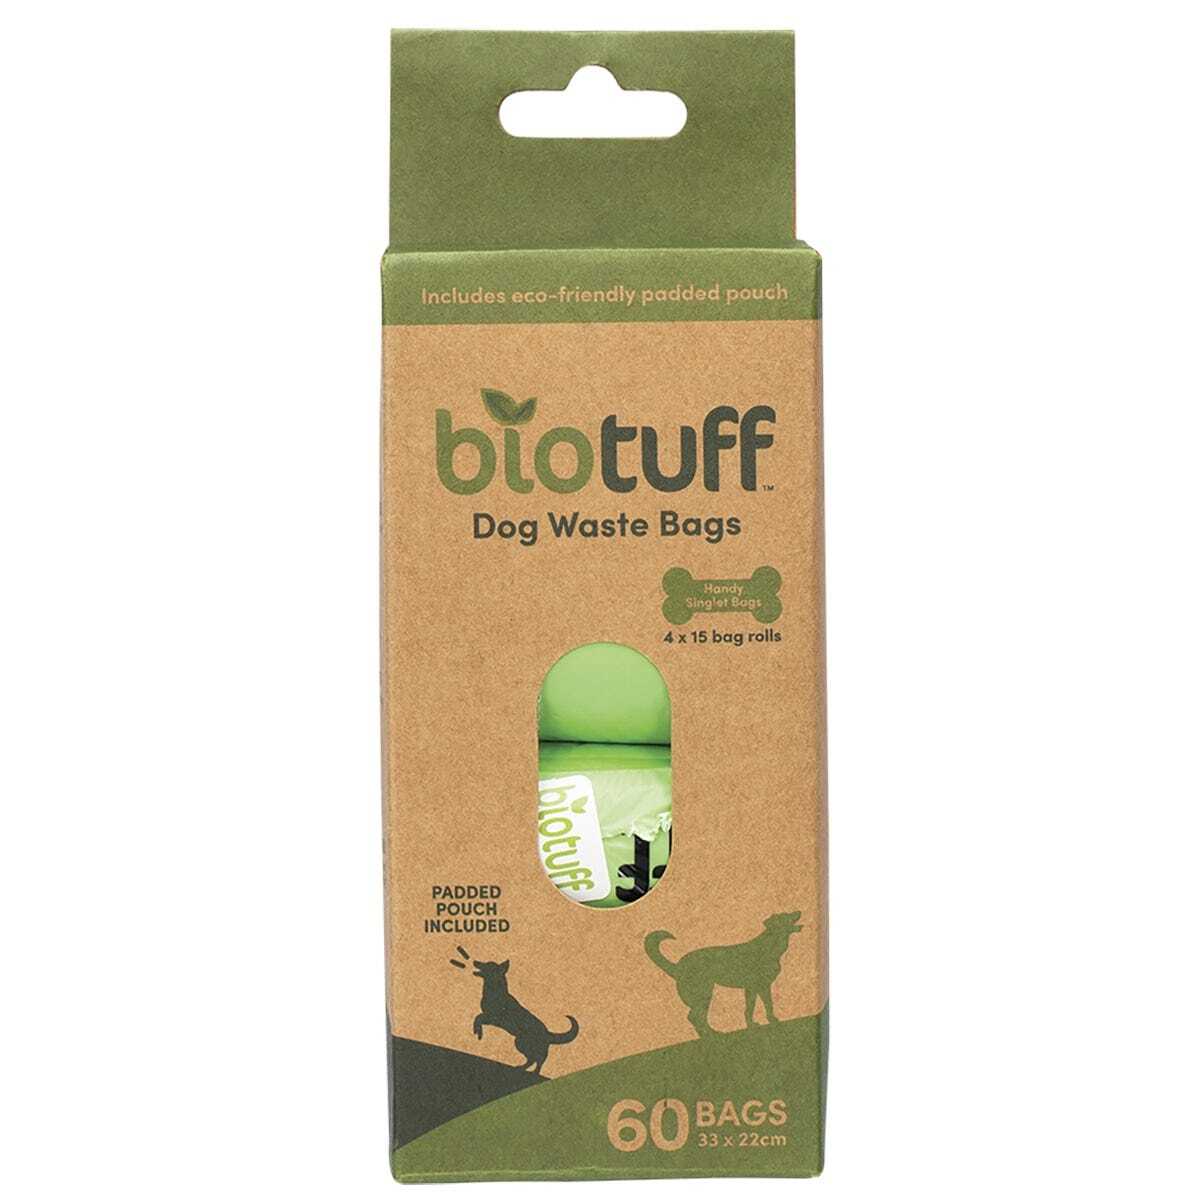 Biotuff Dog Waste Bags Dispenser x60 